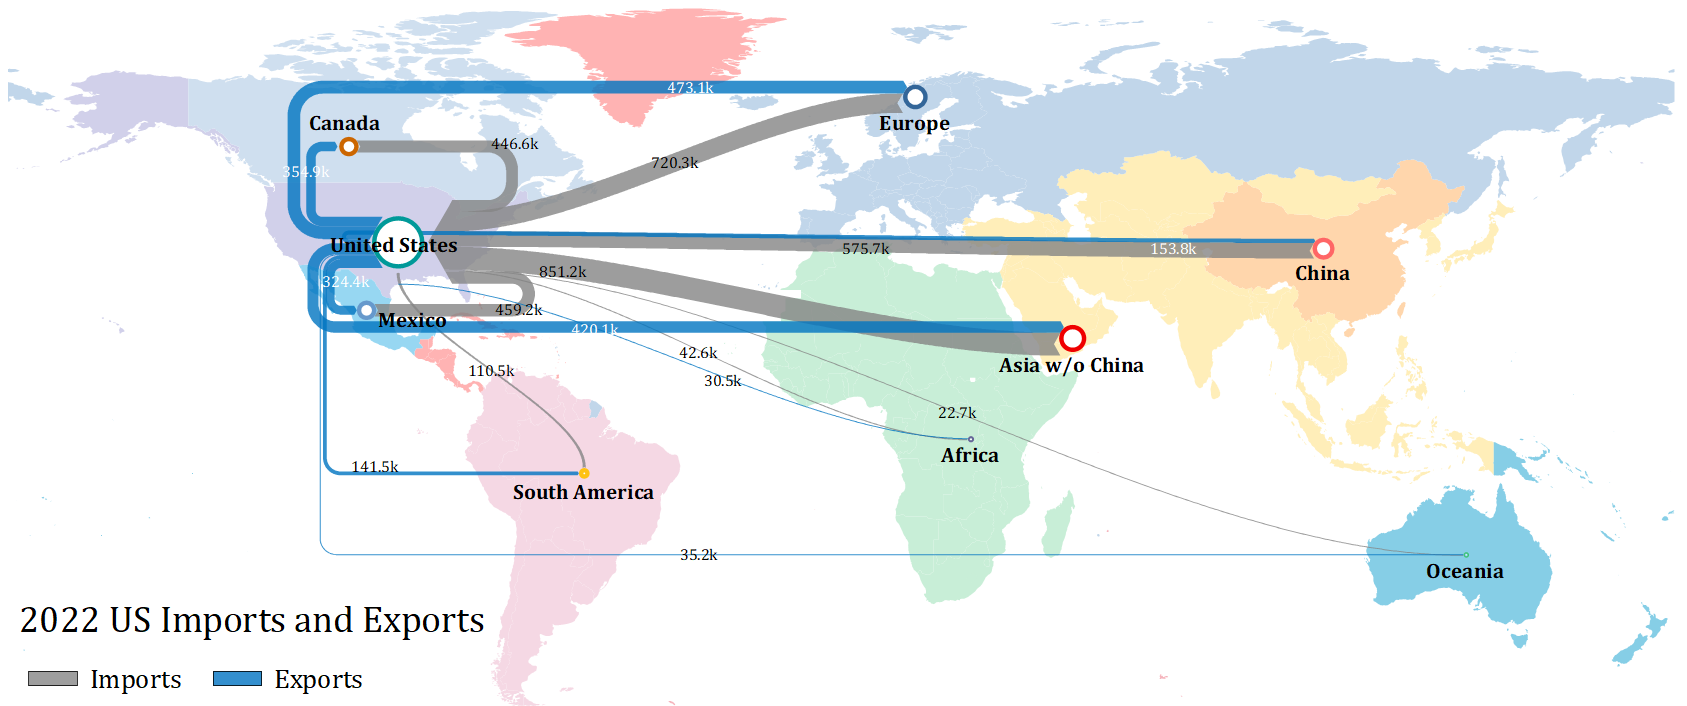 OriginPro 2023b: Sankey Map of US Import and Export